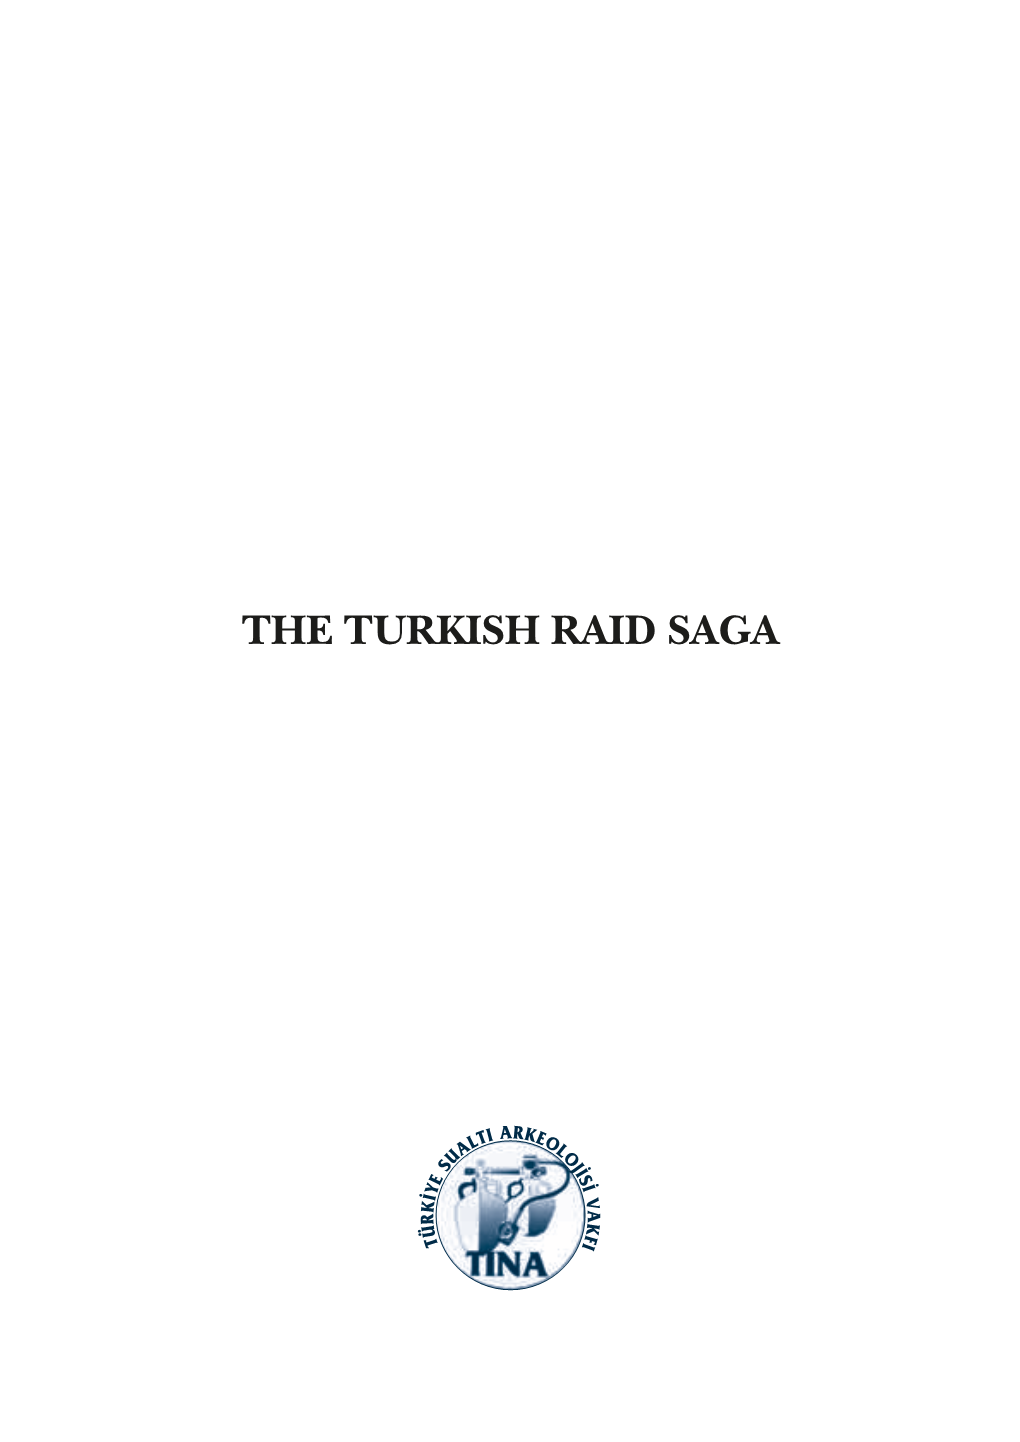 The Turkish Raid Saga